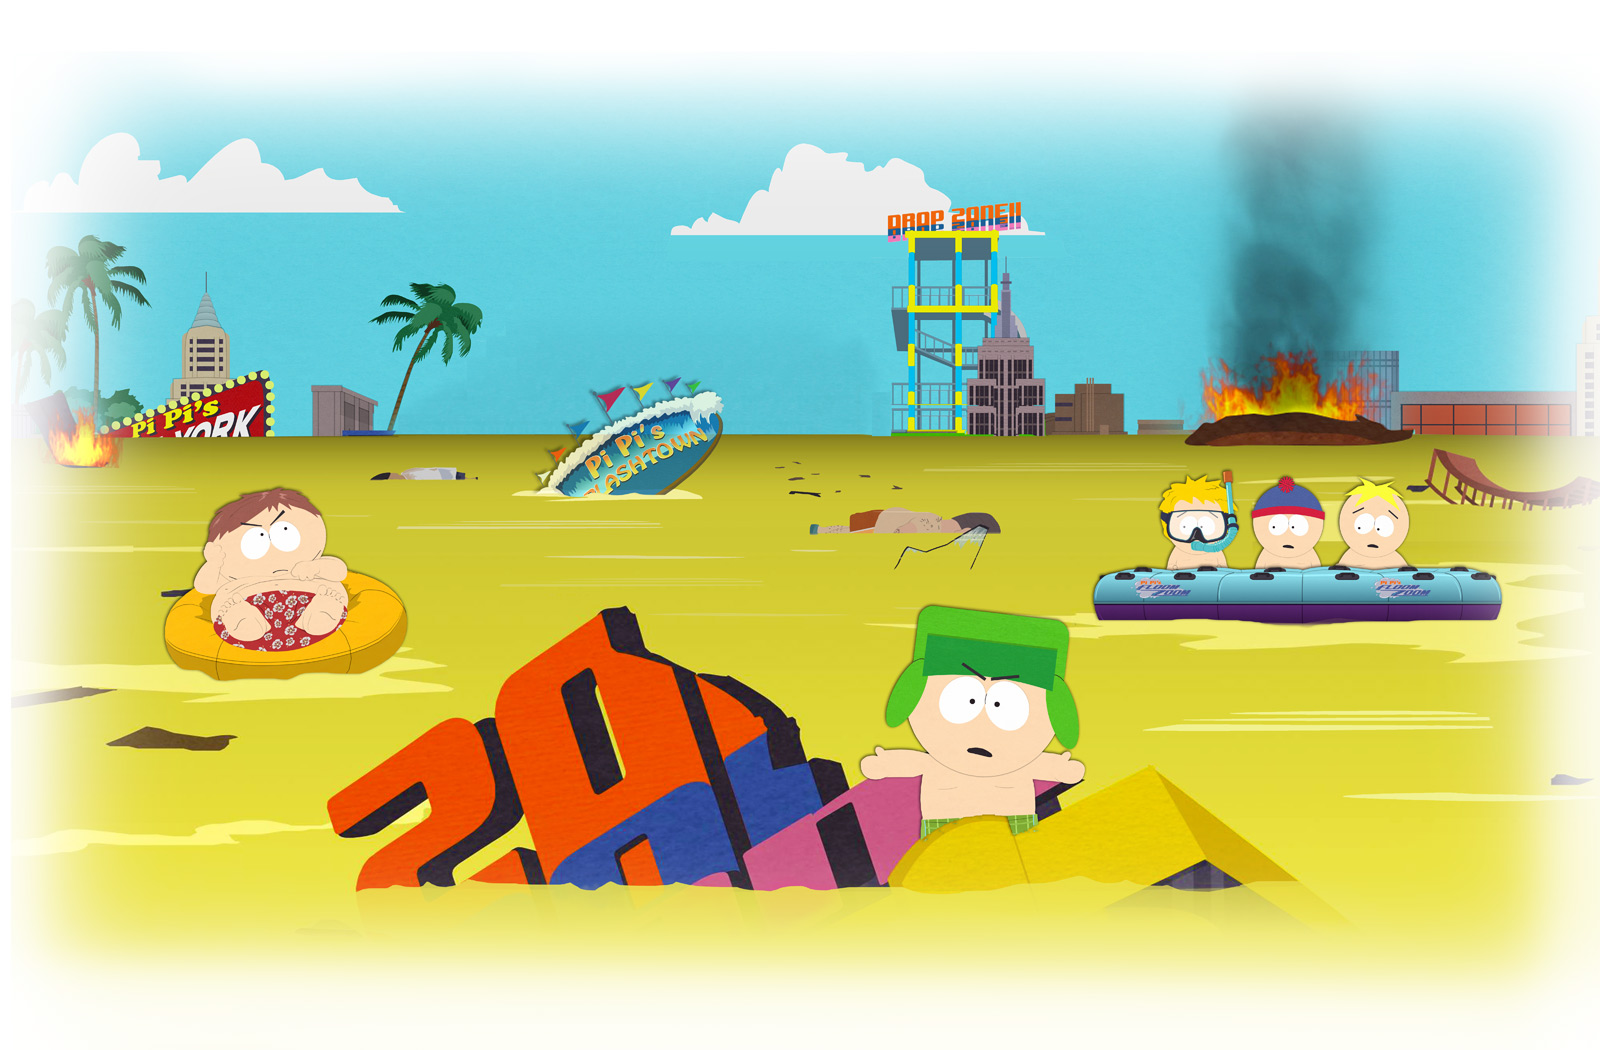 "South Park" desktop wallpaper number 2 (1600 x 1050 pixels)